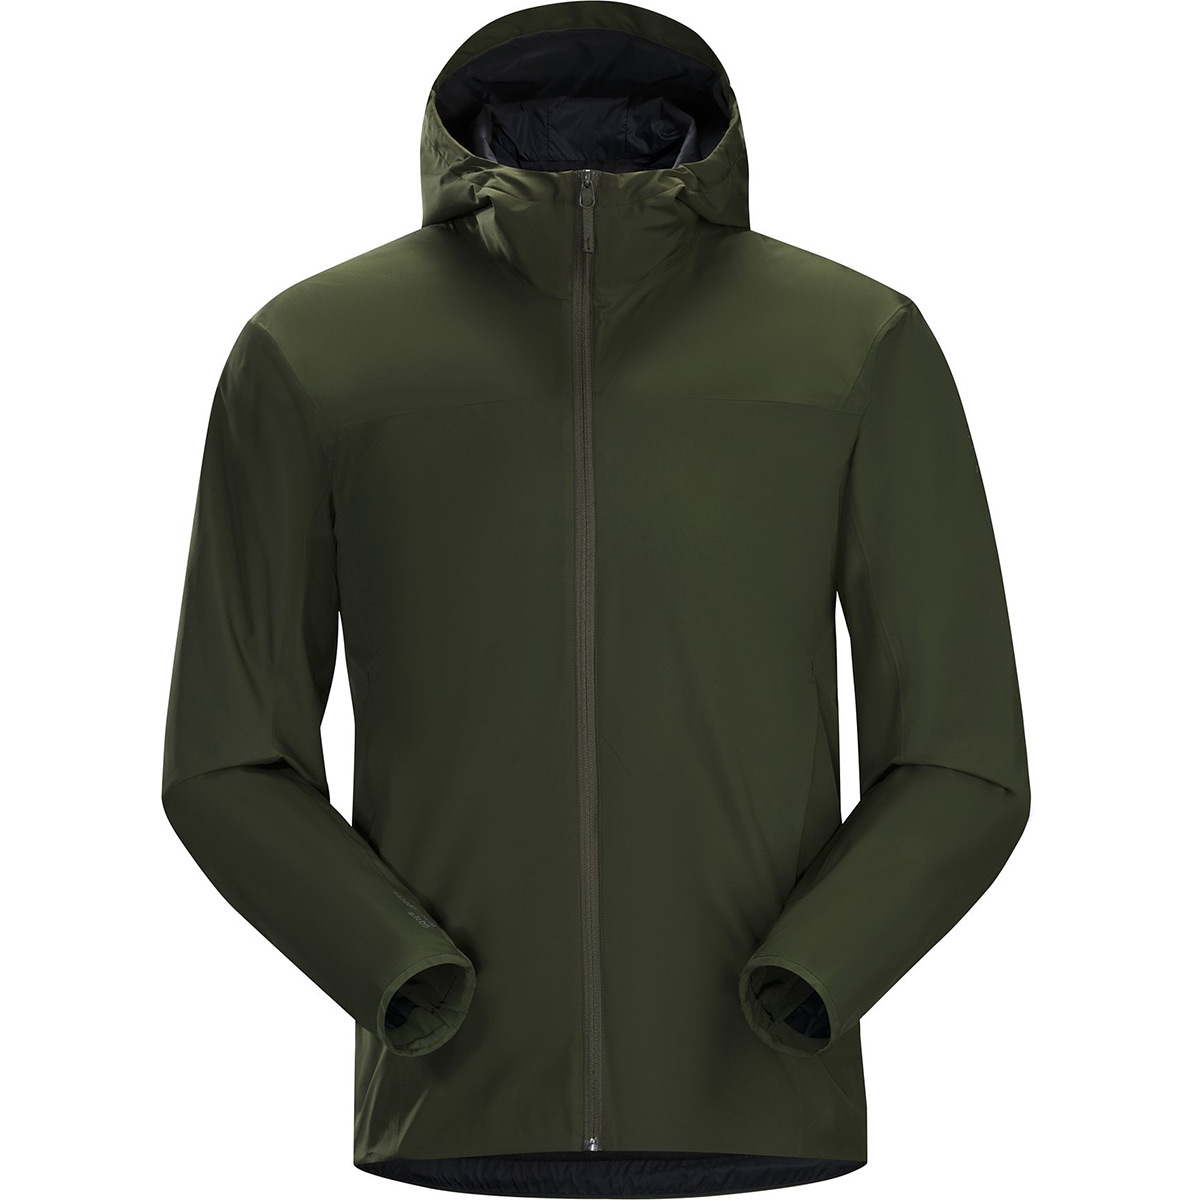 Arc'teryx Solano Jacket, men's, discontinued Spring 2018 model (free ...